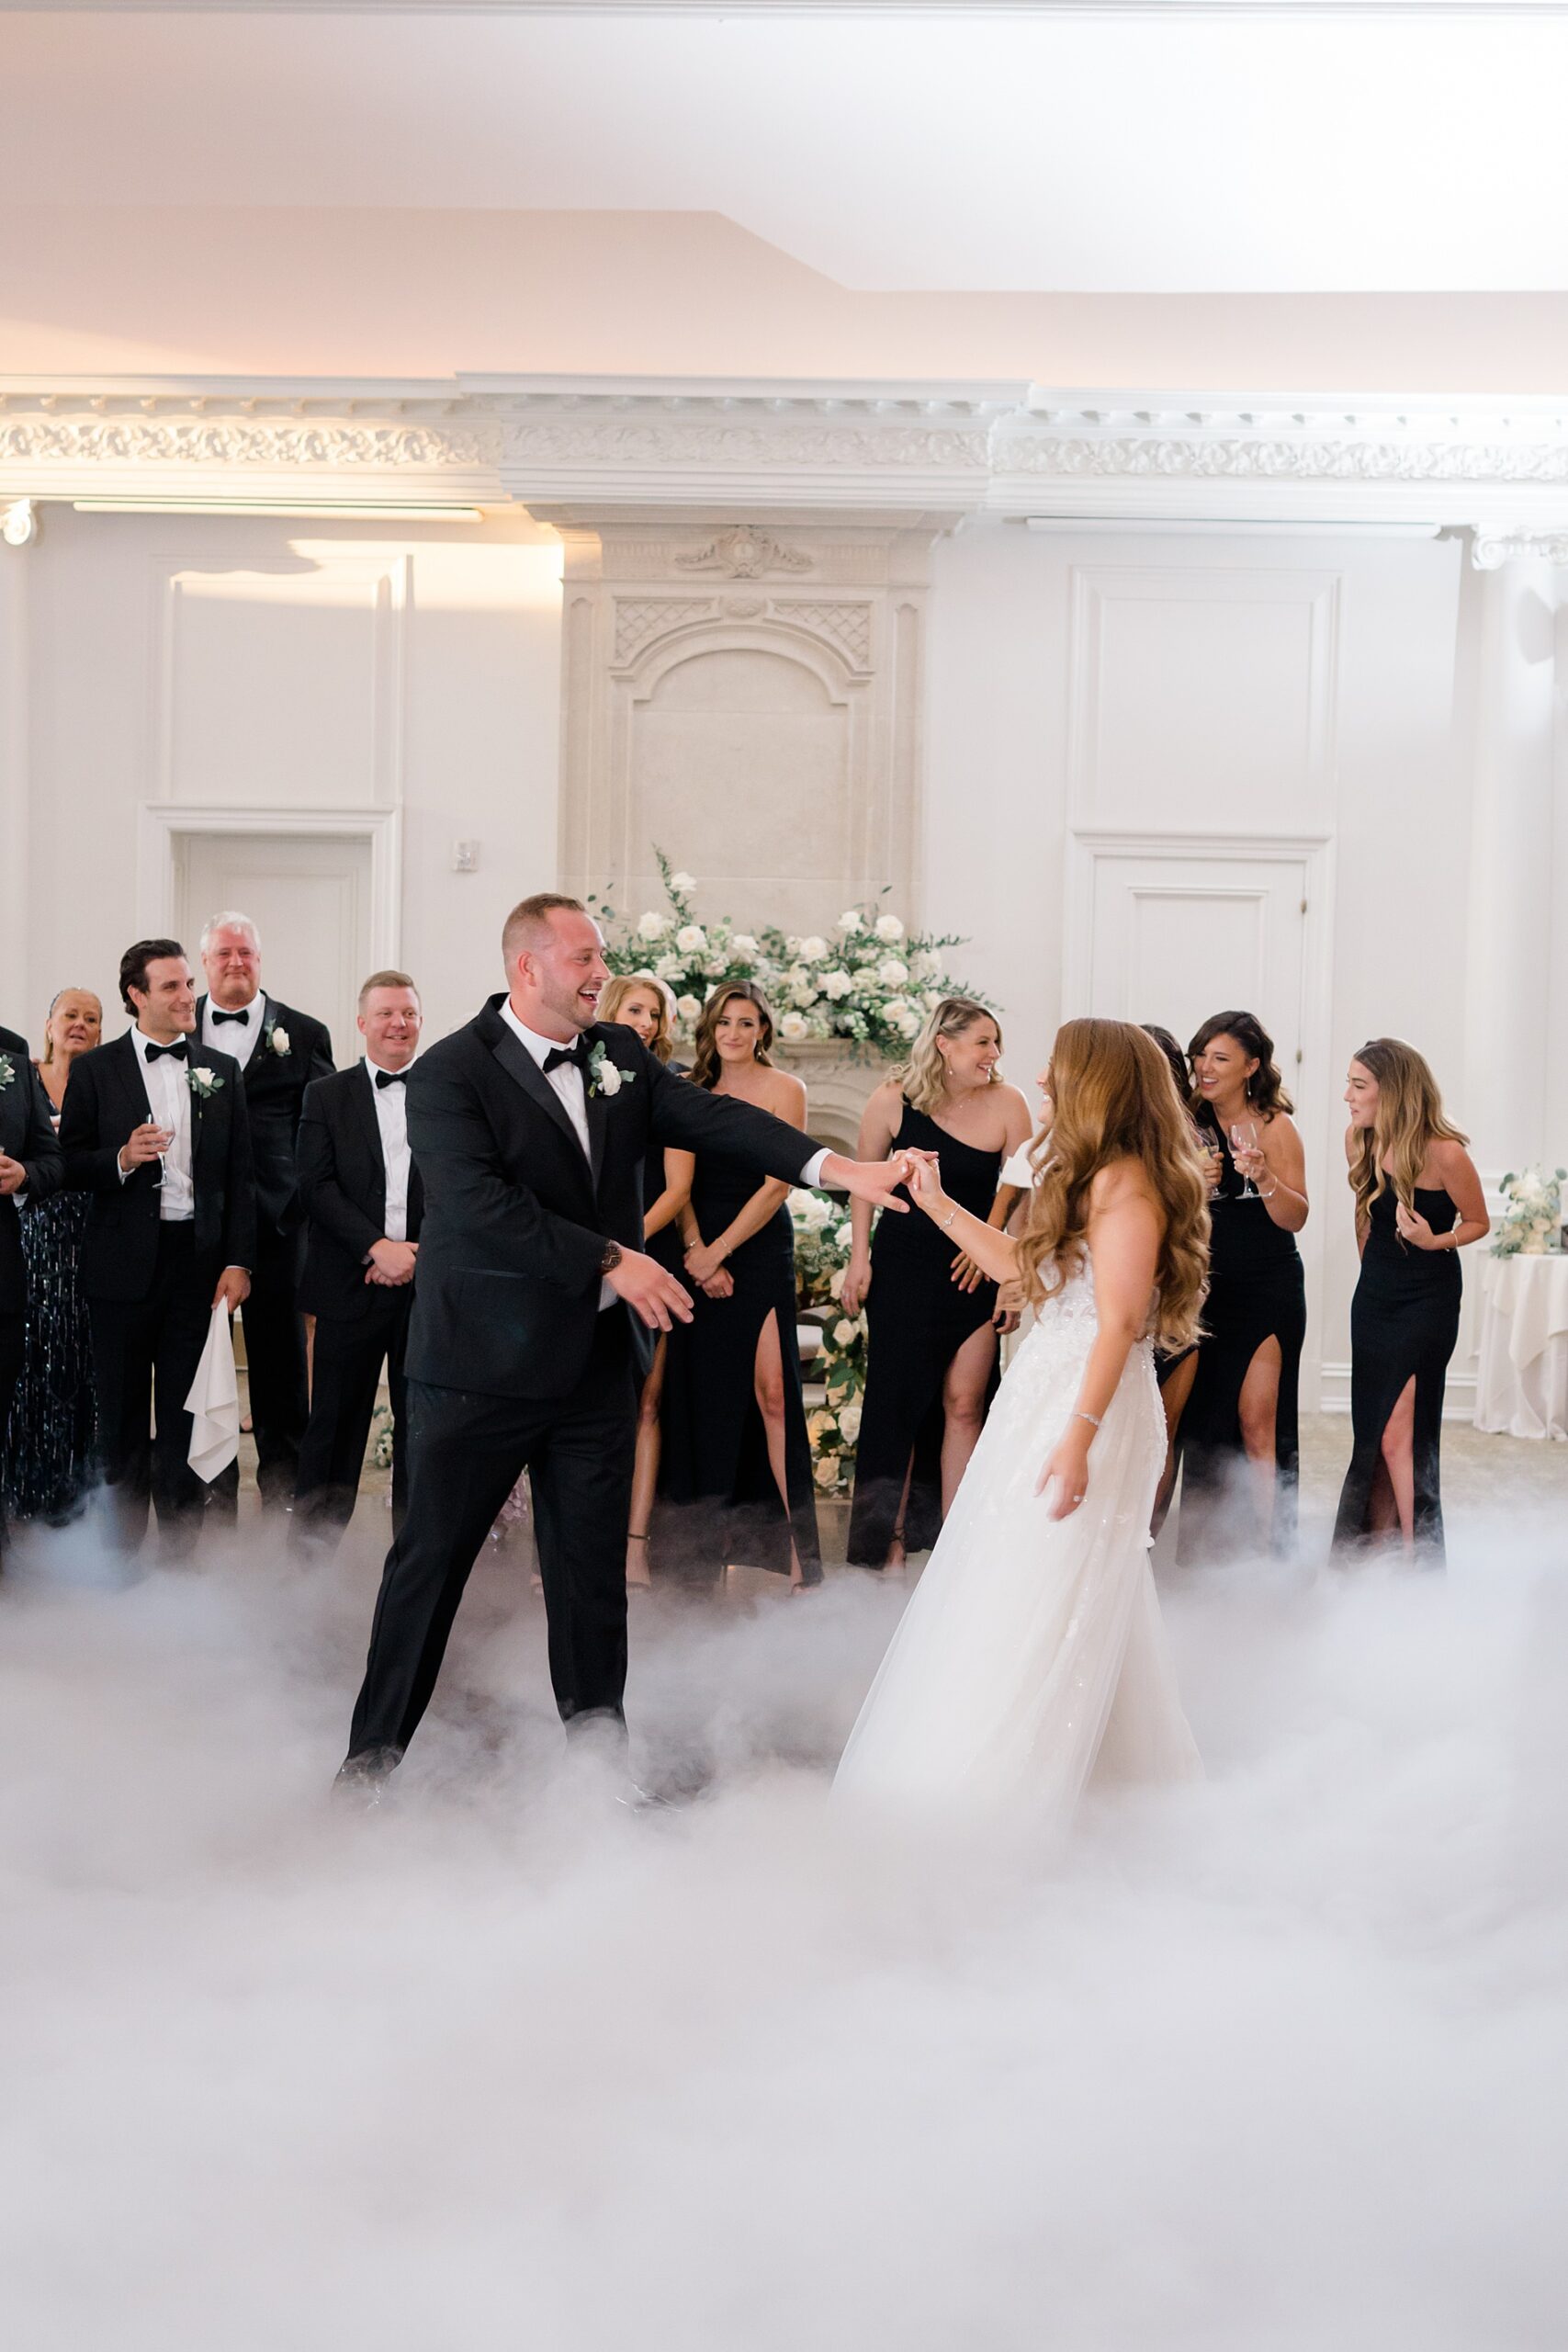 couple on dance floor with fog surrounding them